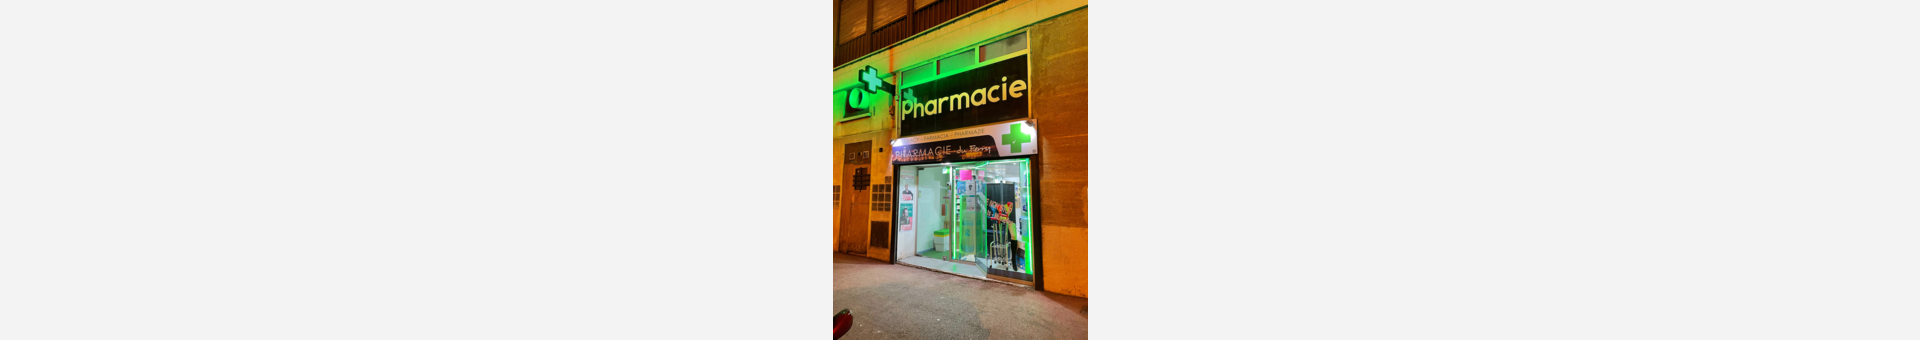 Pharmacie du Ferry,Marseille